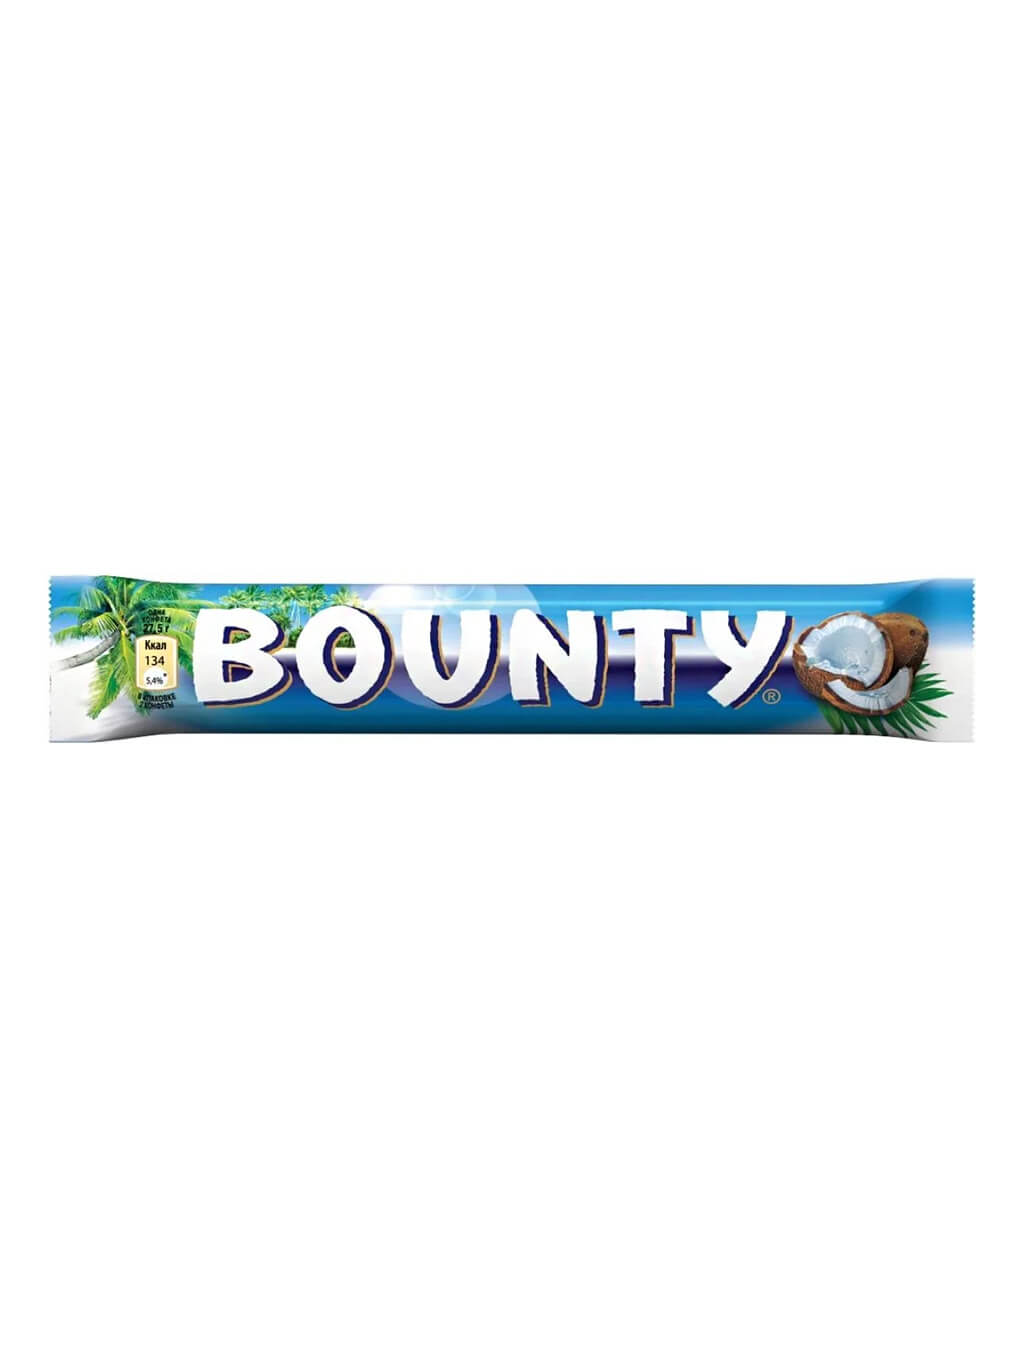 Bounty Баунти шоколадный батончик 55 гр купить оптом